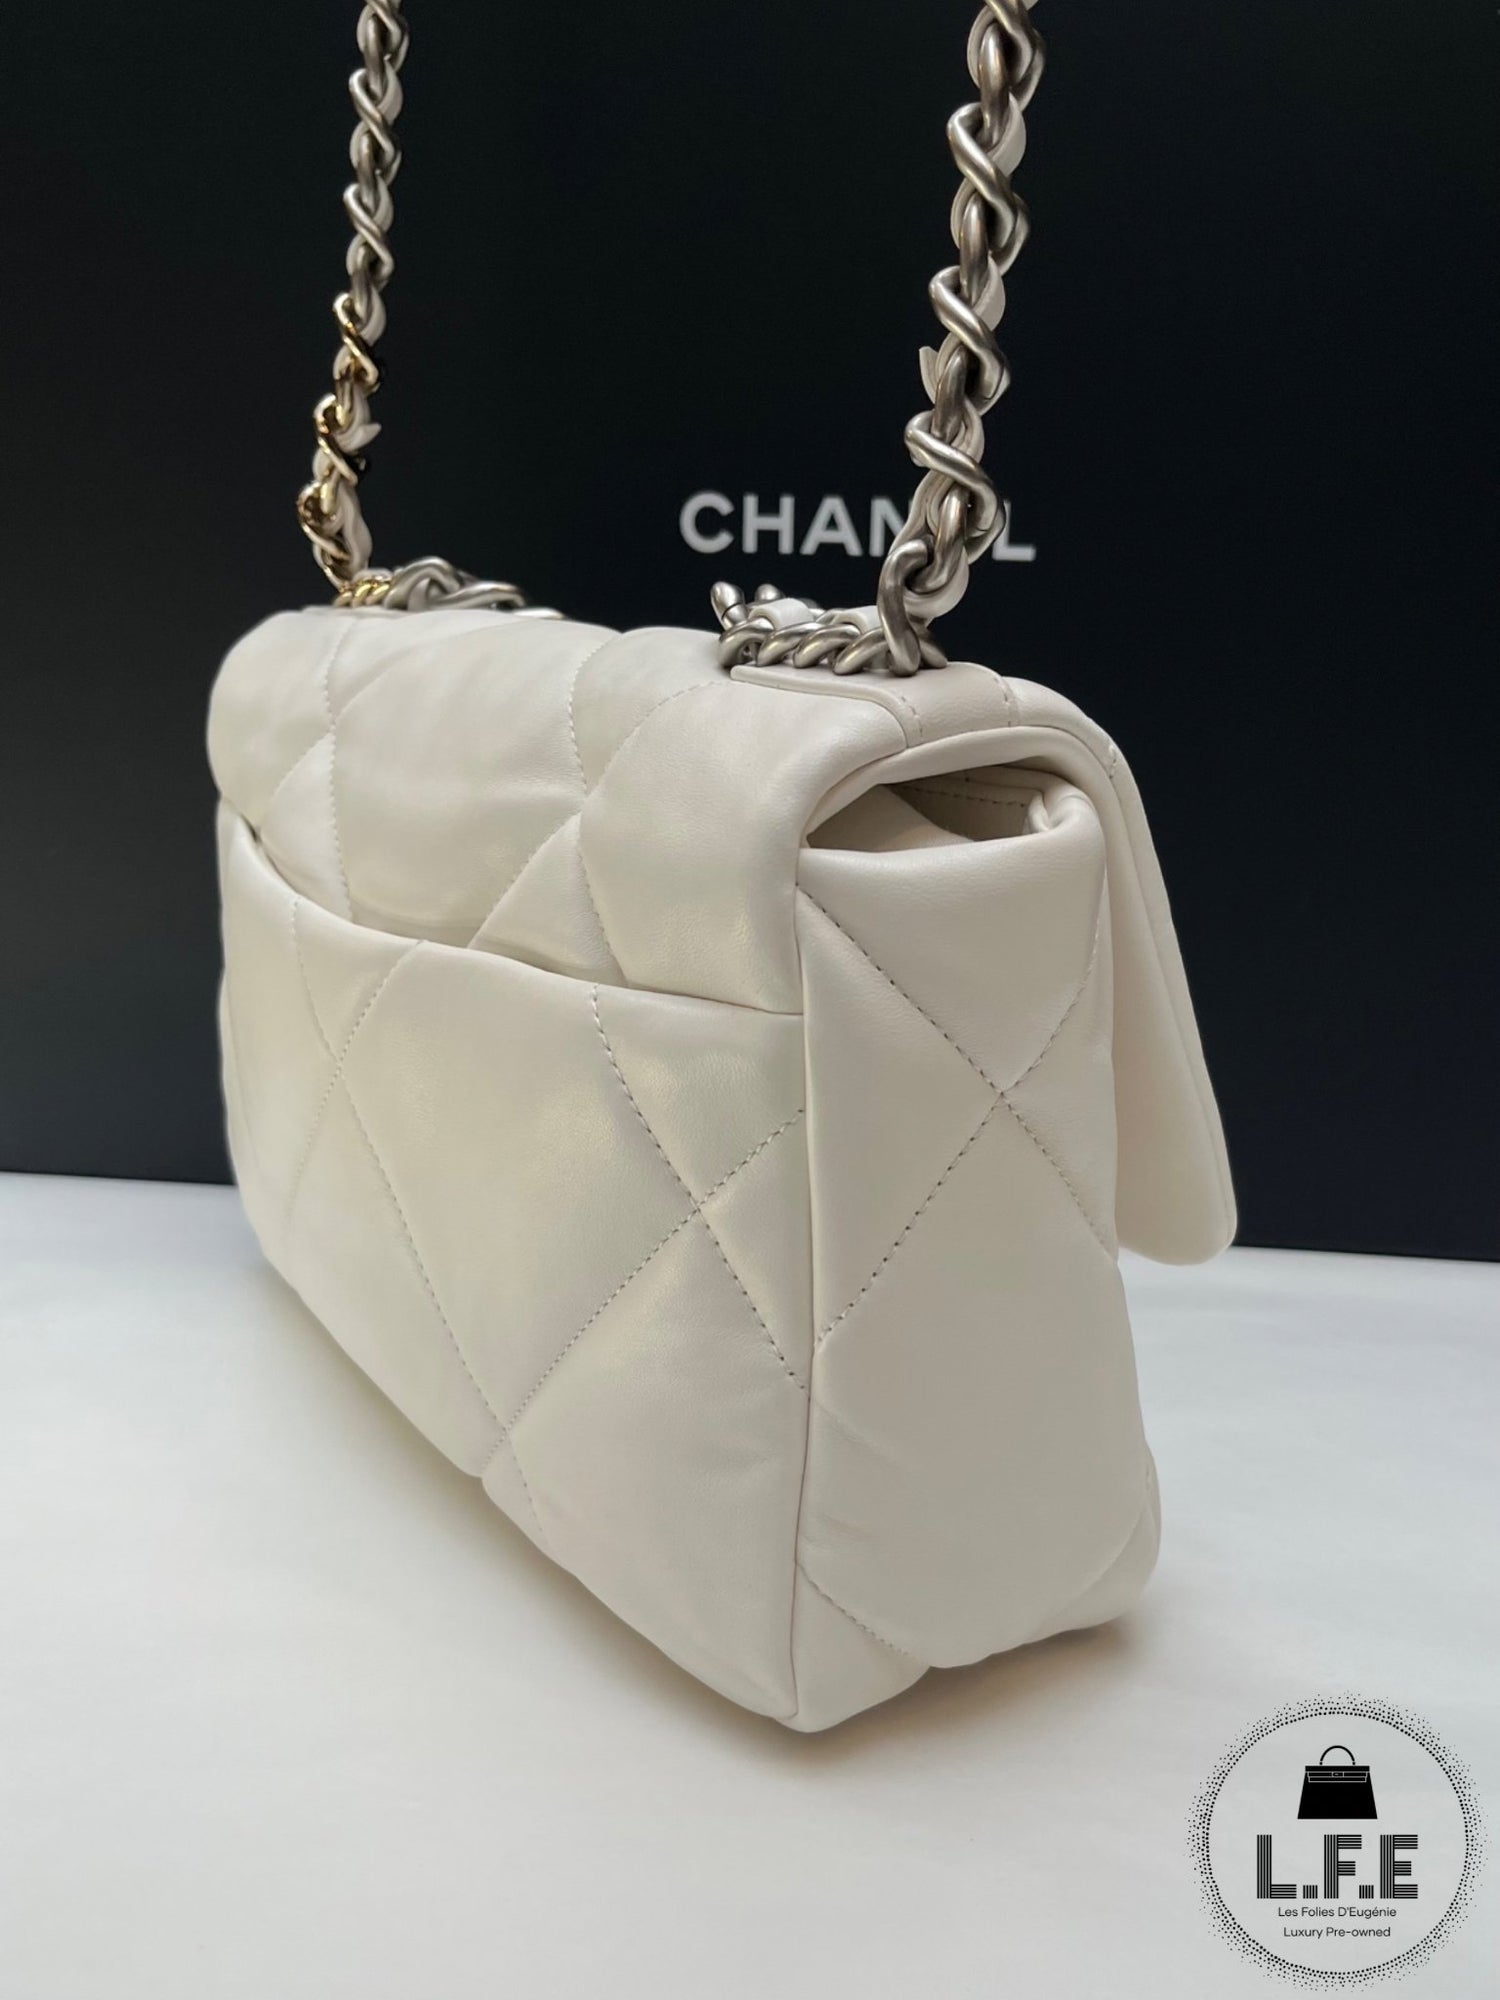 Chanel - Sac Chanel 19 - Les Folies d&